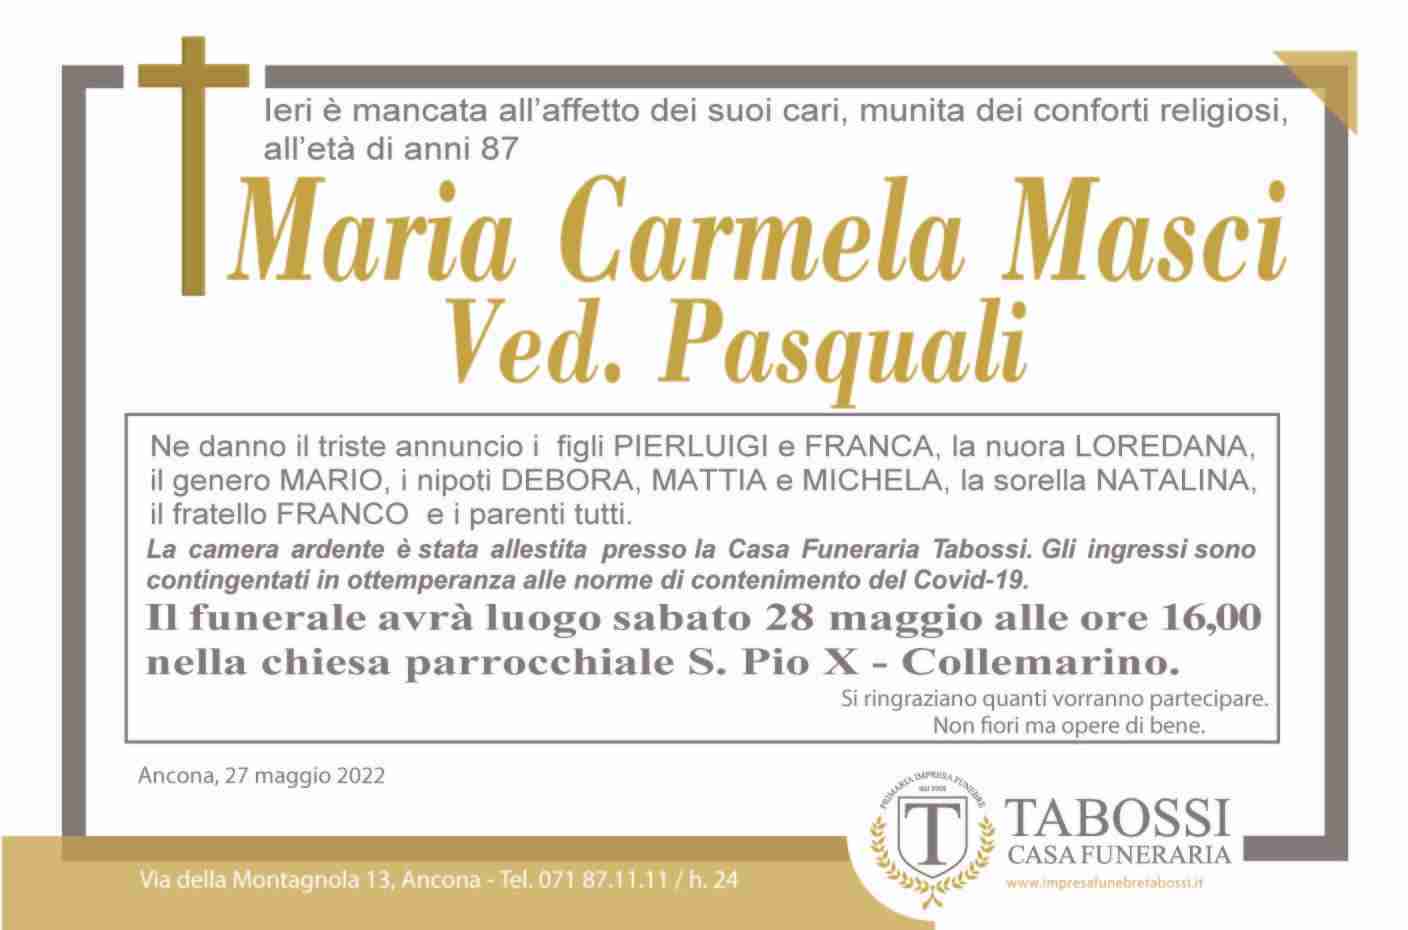 Maria Carmela Masci